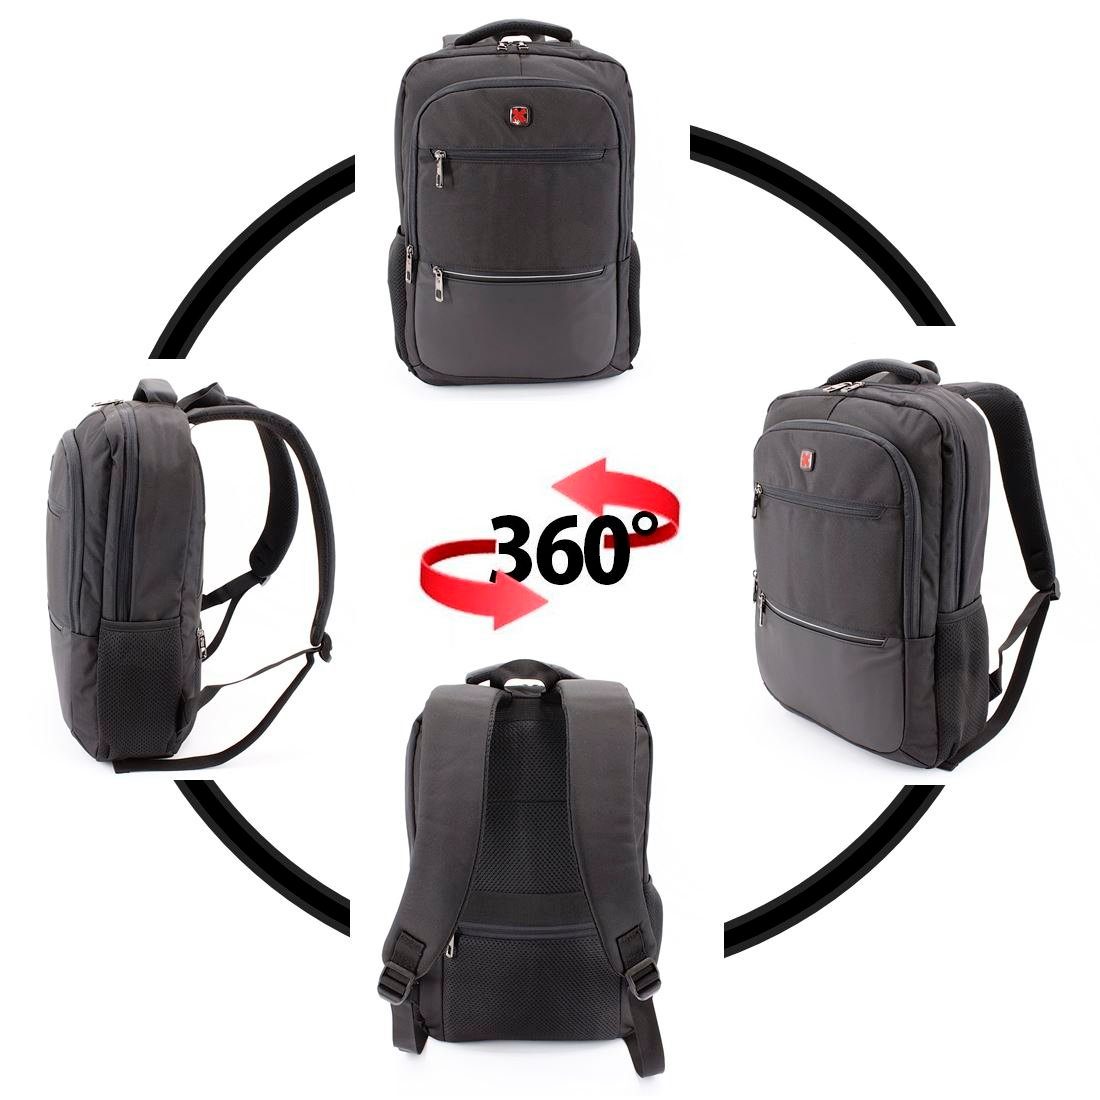 Backpack Laptoprucksack (schwarz), 15,6" Freizeitrucksack Schulrucksack Cityrucksack Notebook_Rucksack SHG Sportrucksack